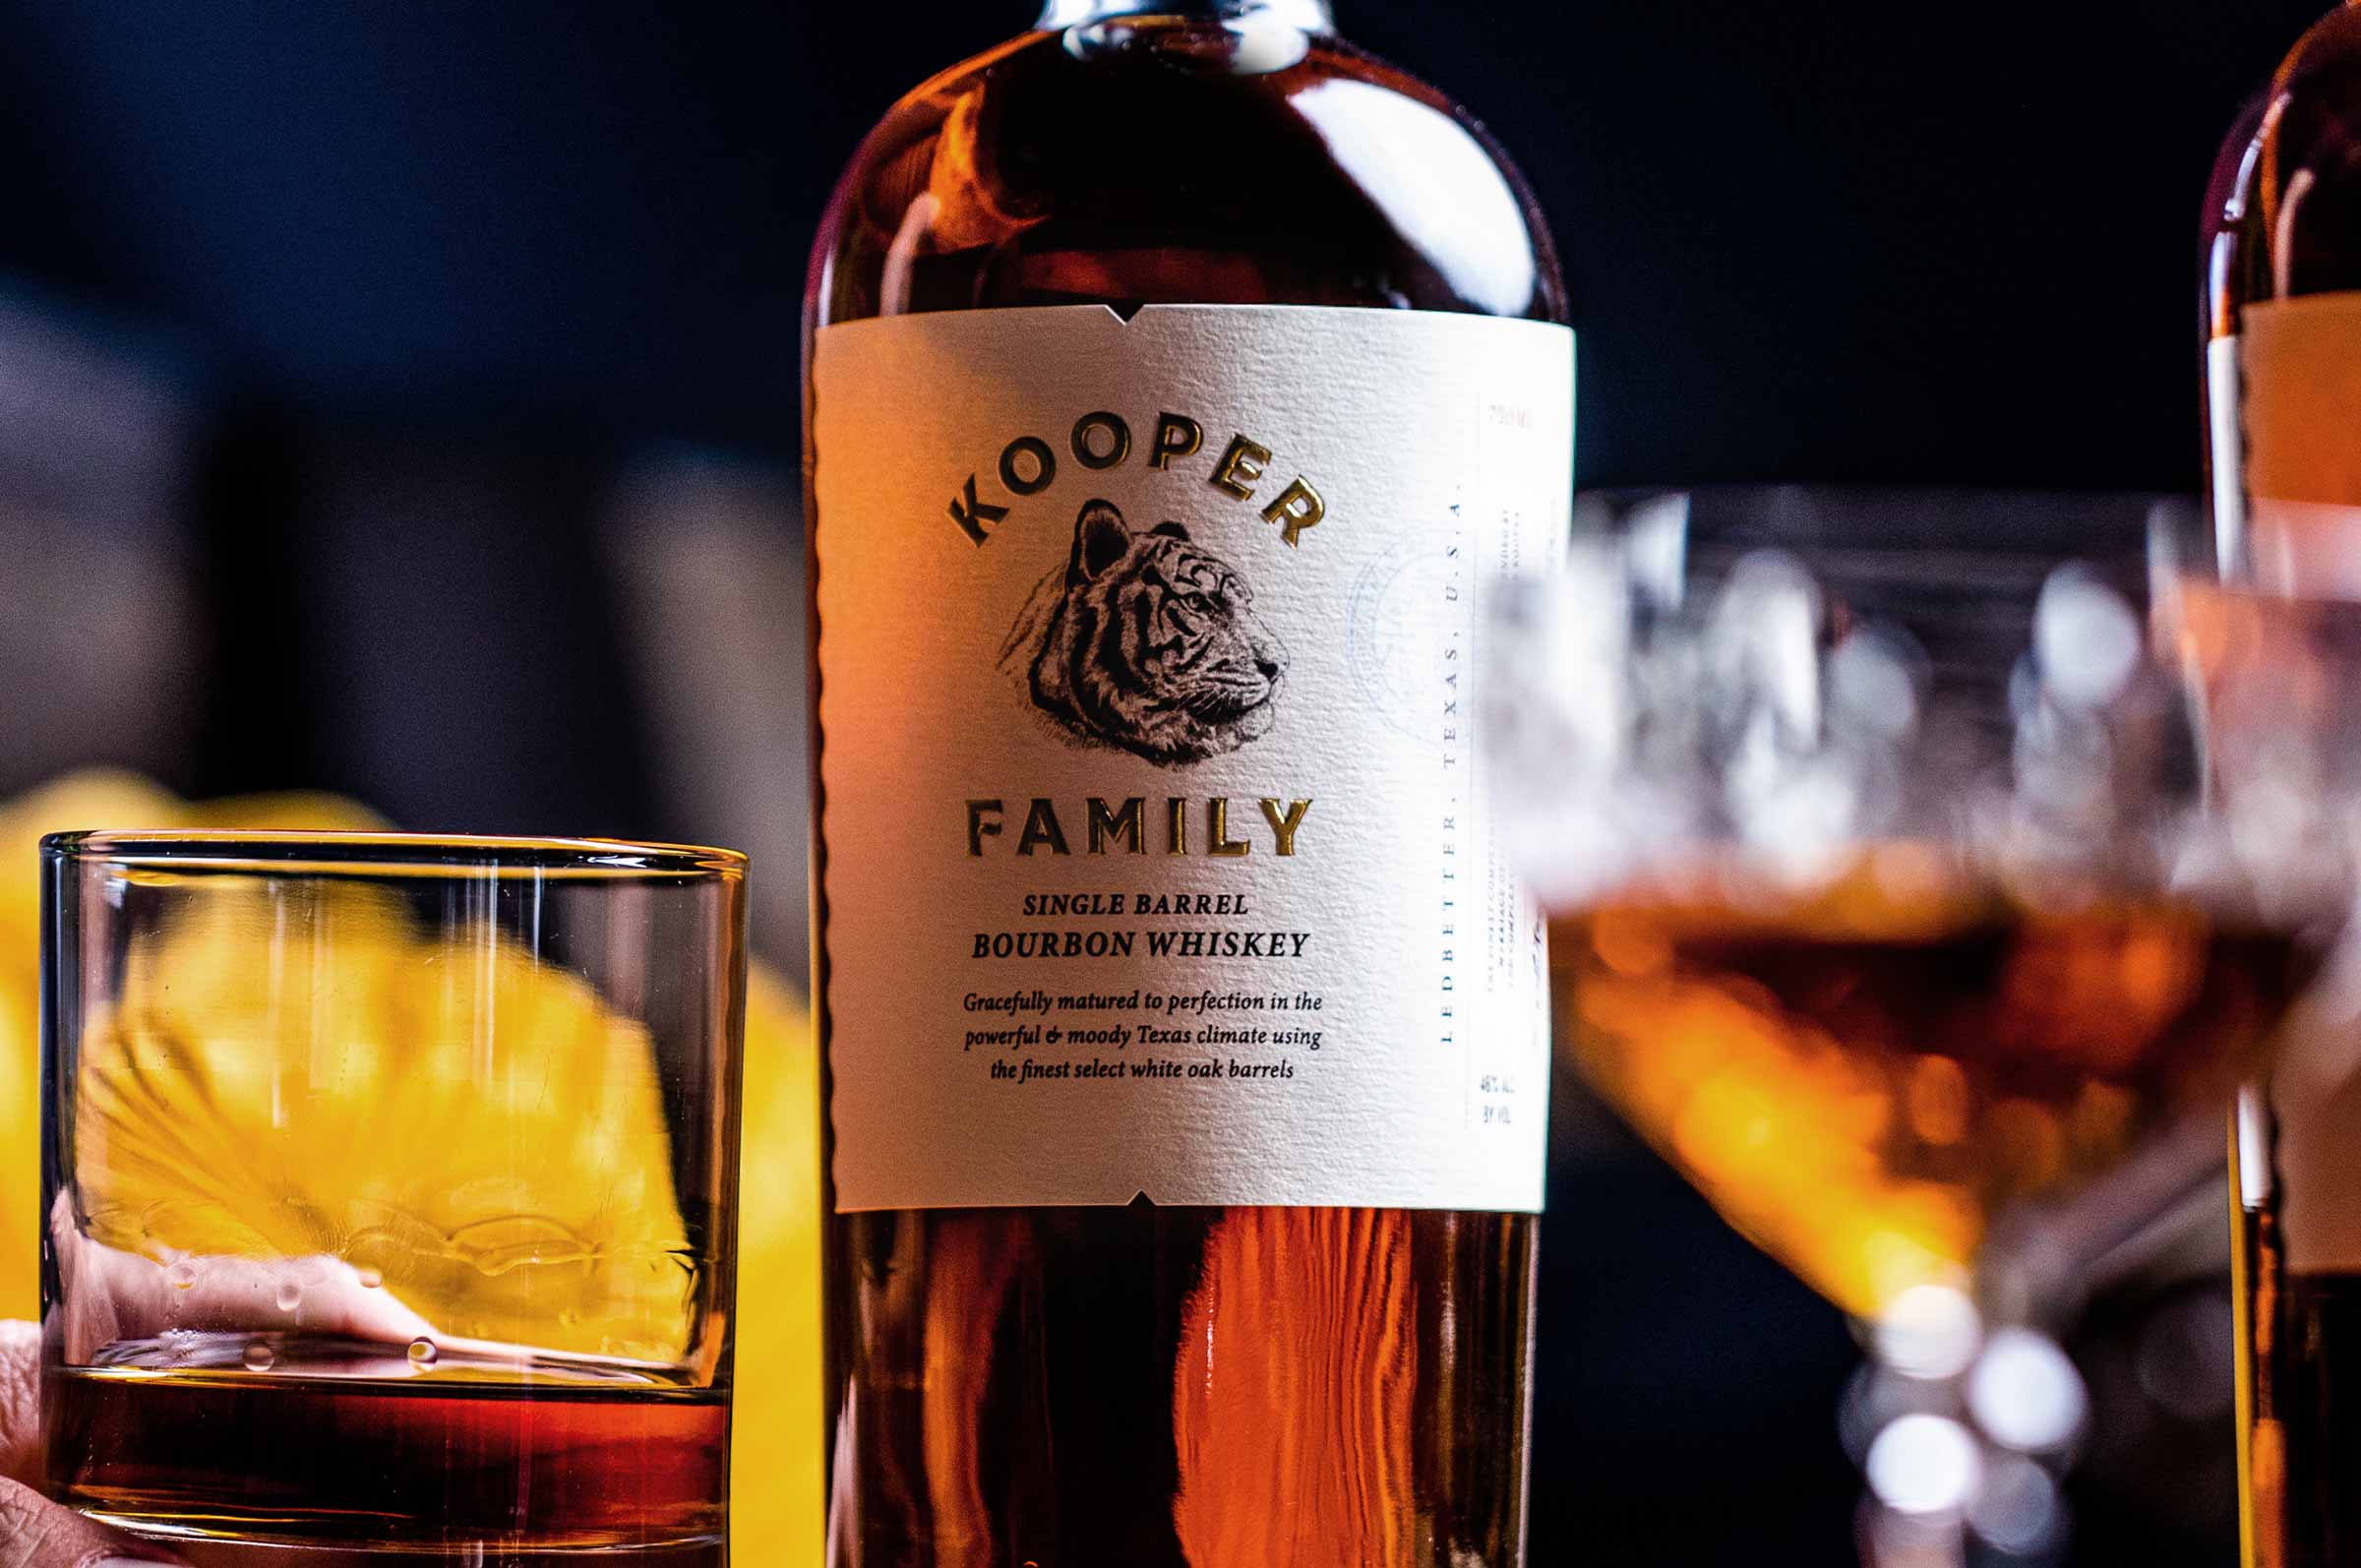 Kooper Family Single Barrel Bourbon